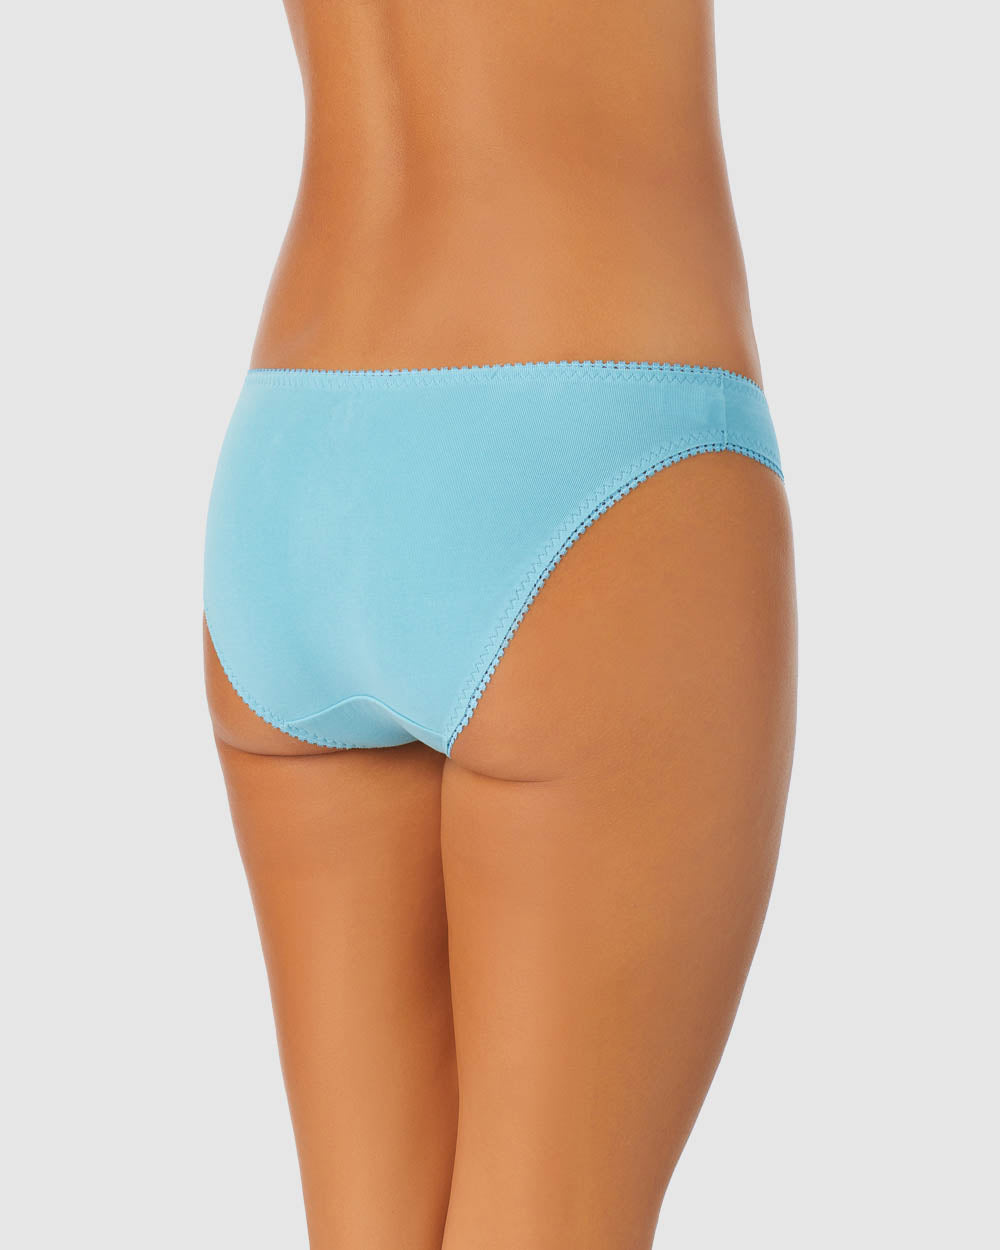 A lady wearing turquoise sea cabana cotton hip bikini underwear.